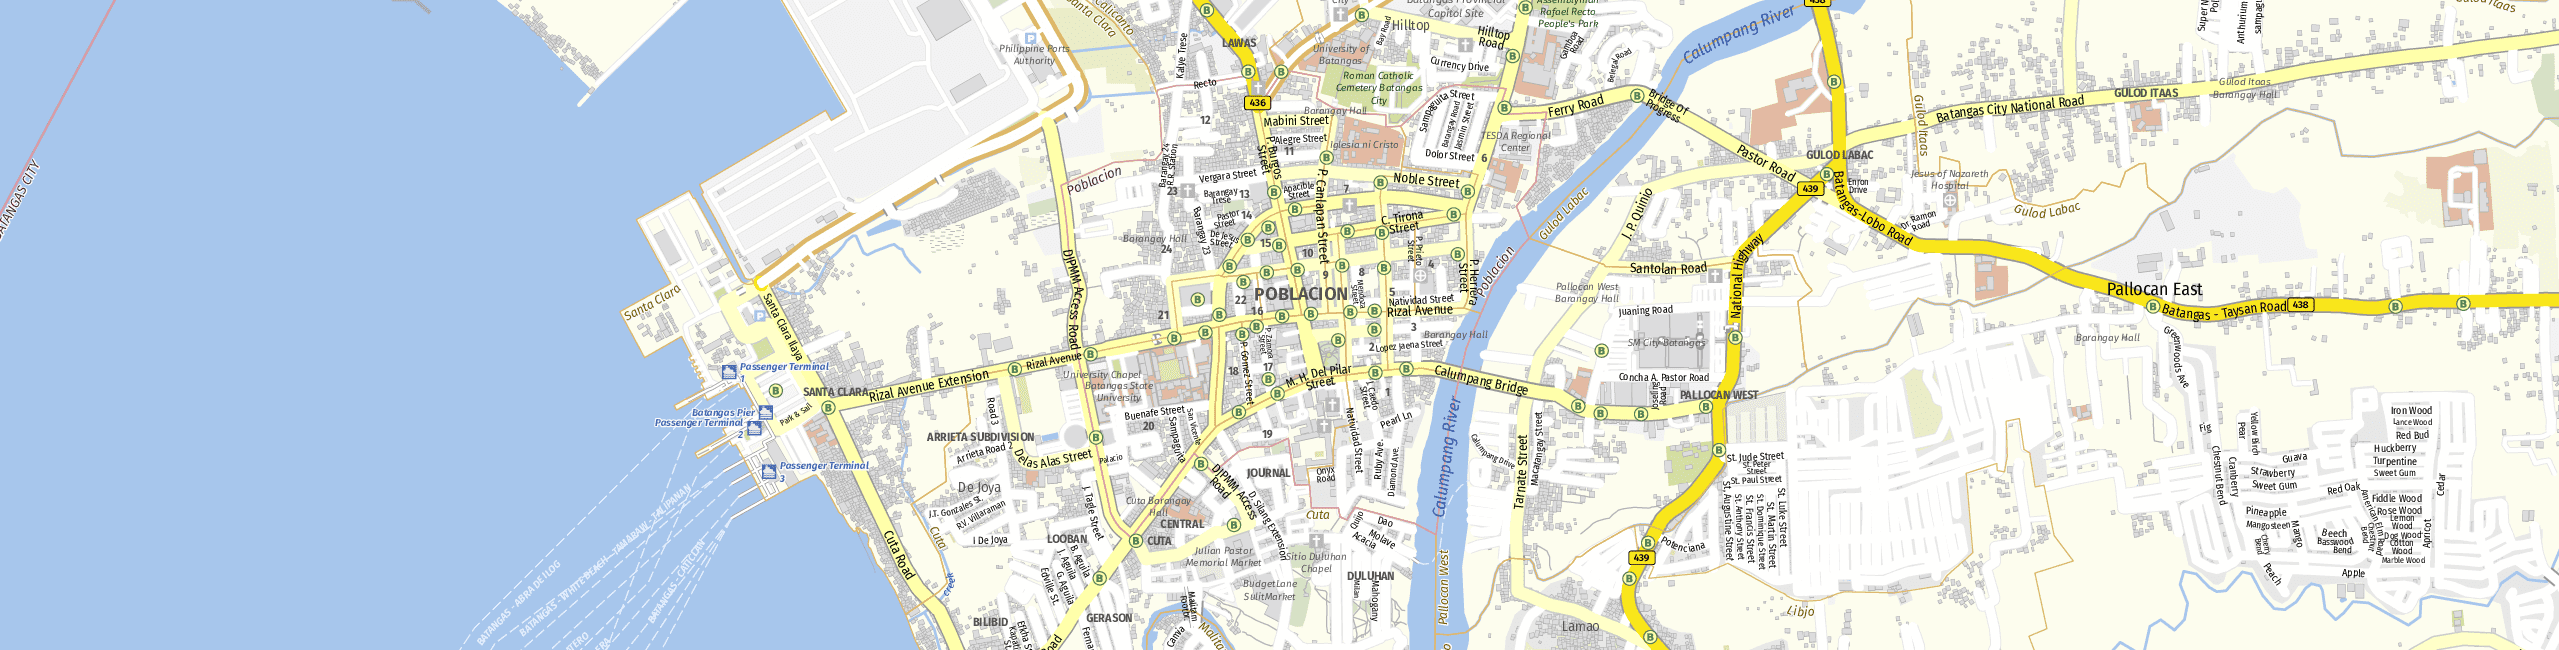 Stadtplan Batangas City zum Downloaden.